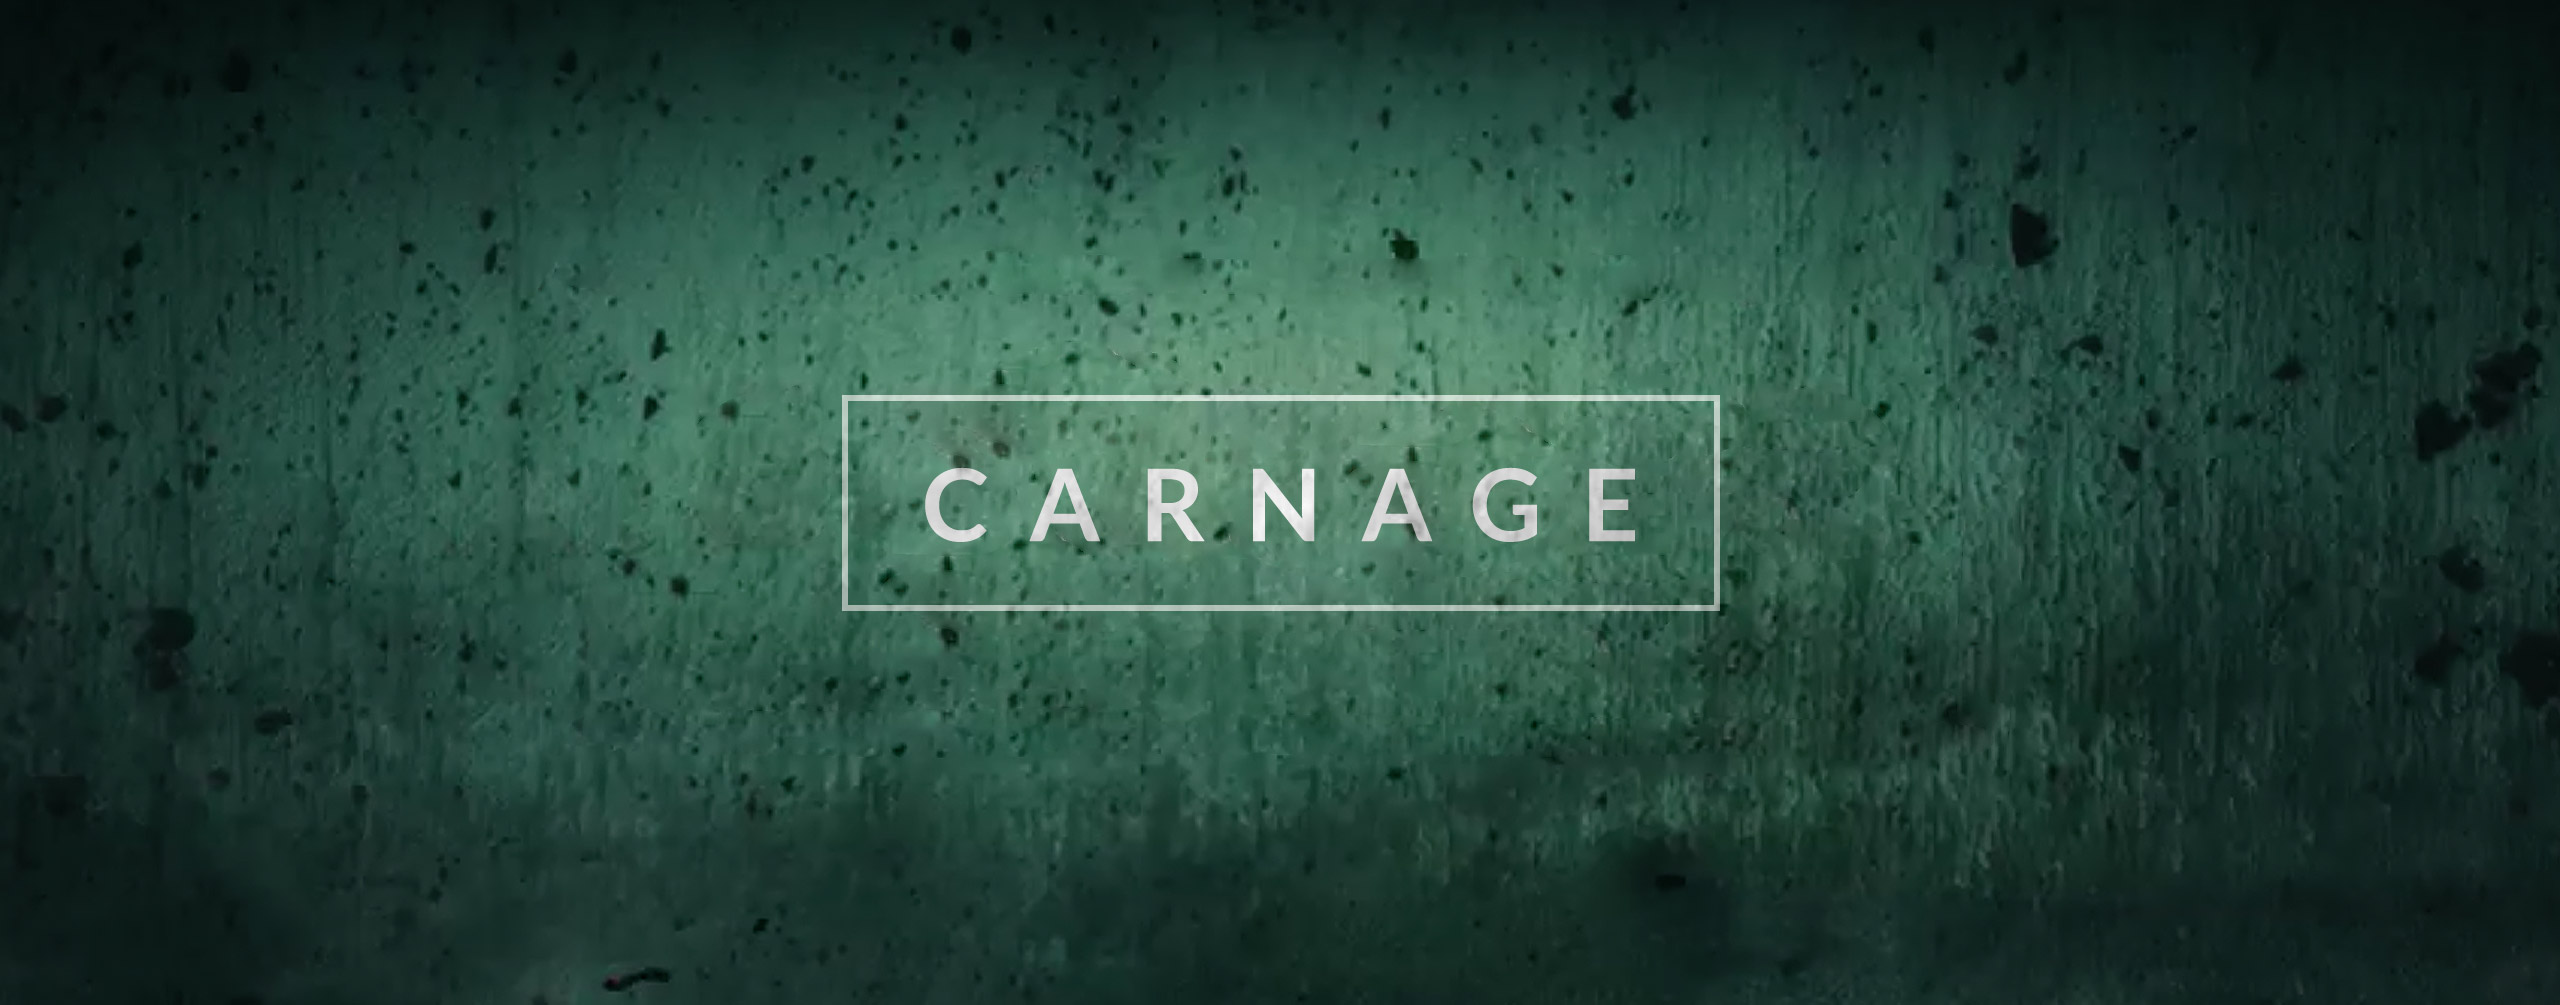 carnage signal download